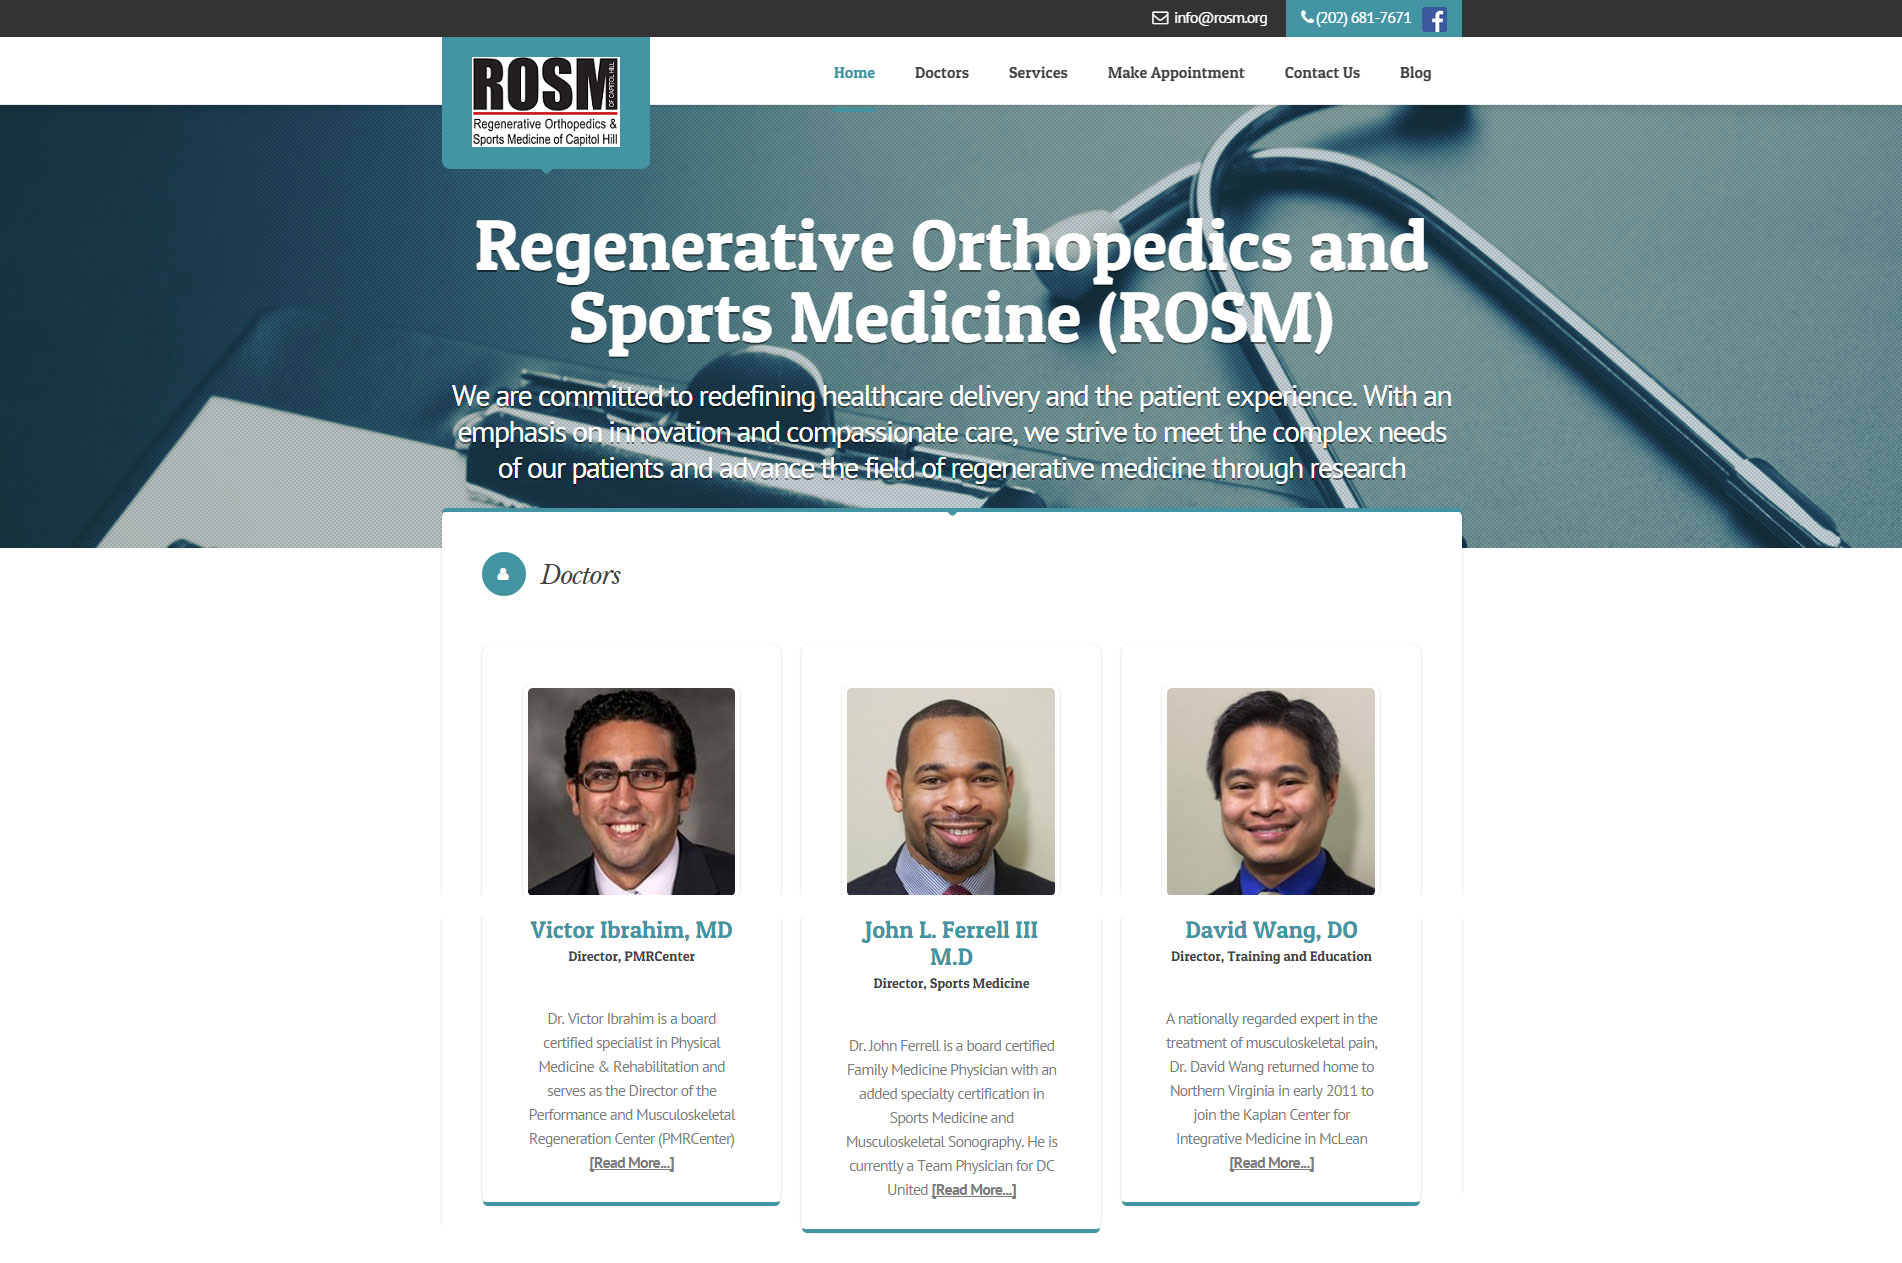 rosm doctors page